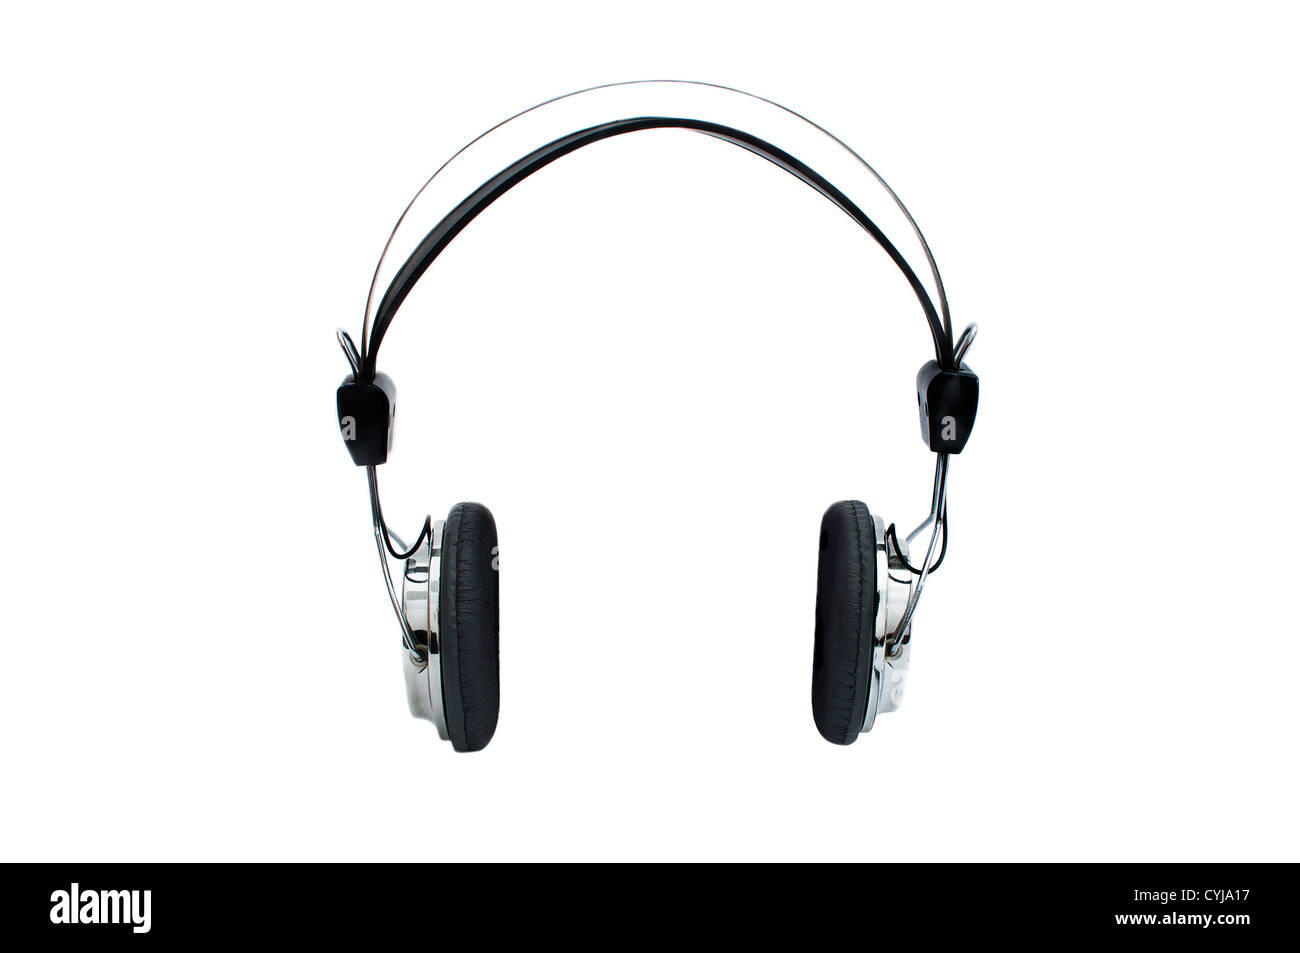 Retro headphones isolated on white background Stock Photo - Alamy